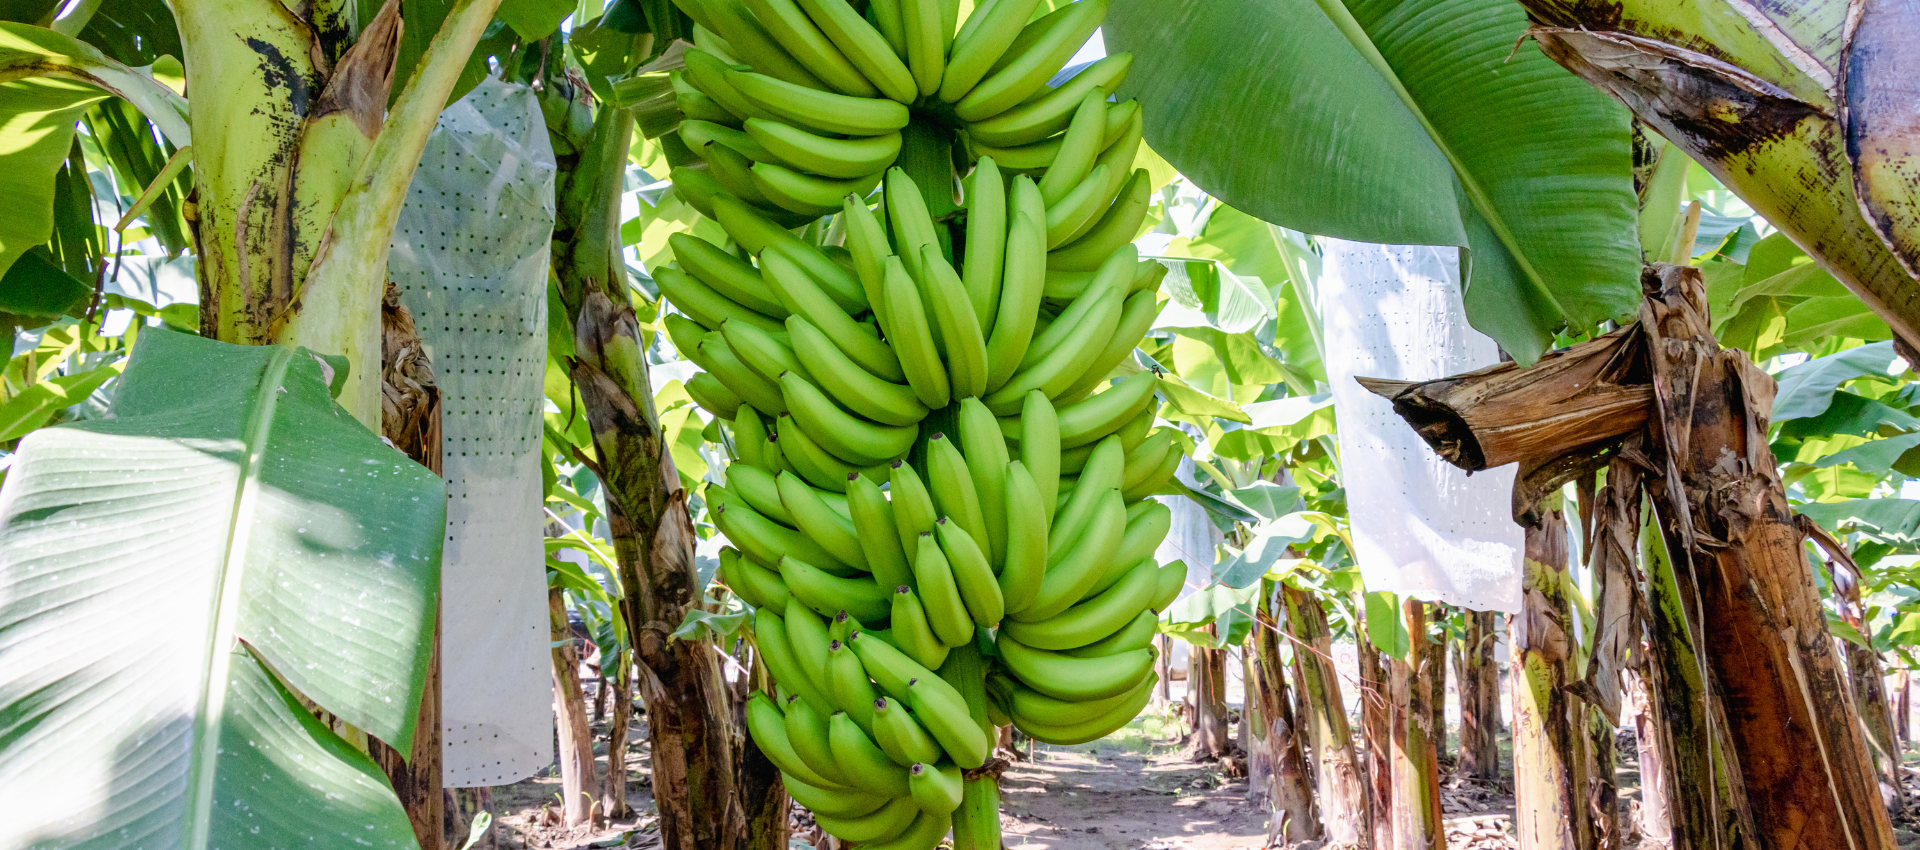 Great Foods Global Banana